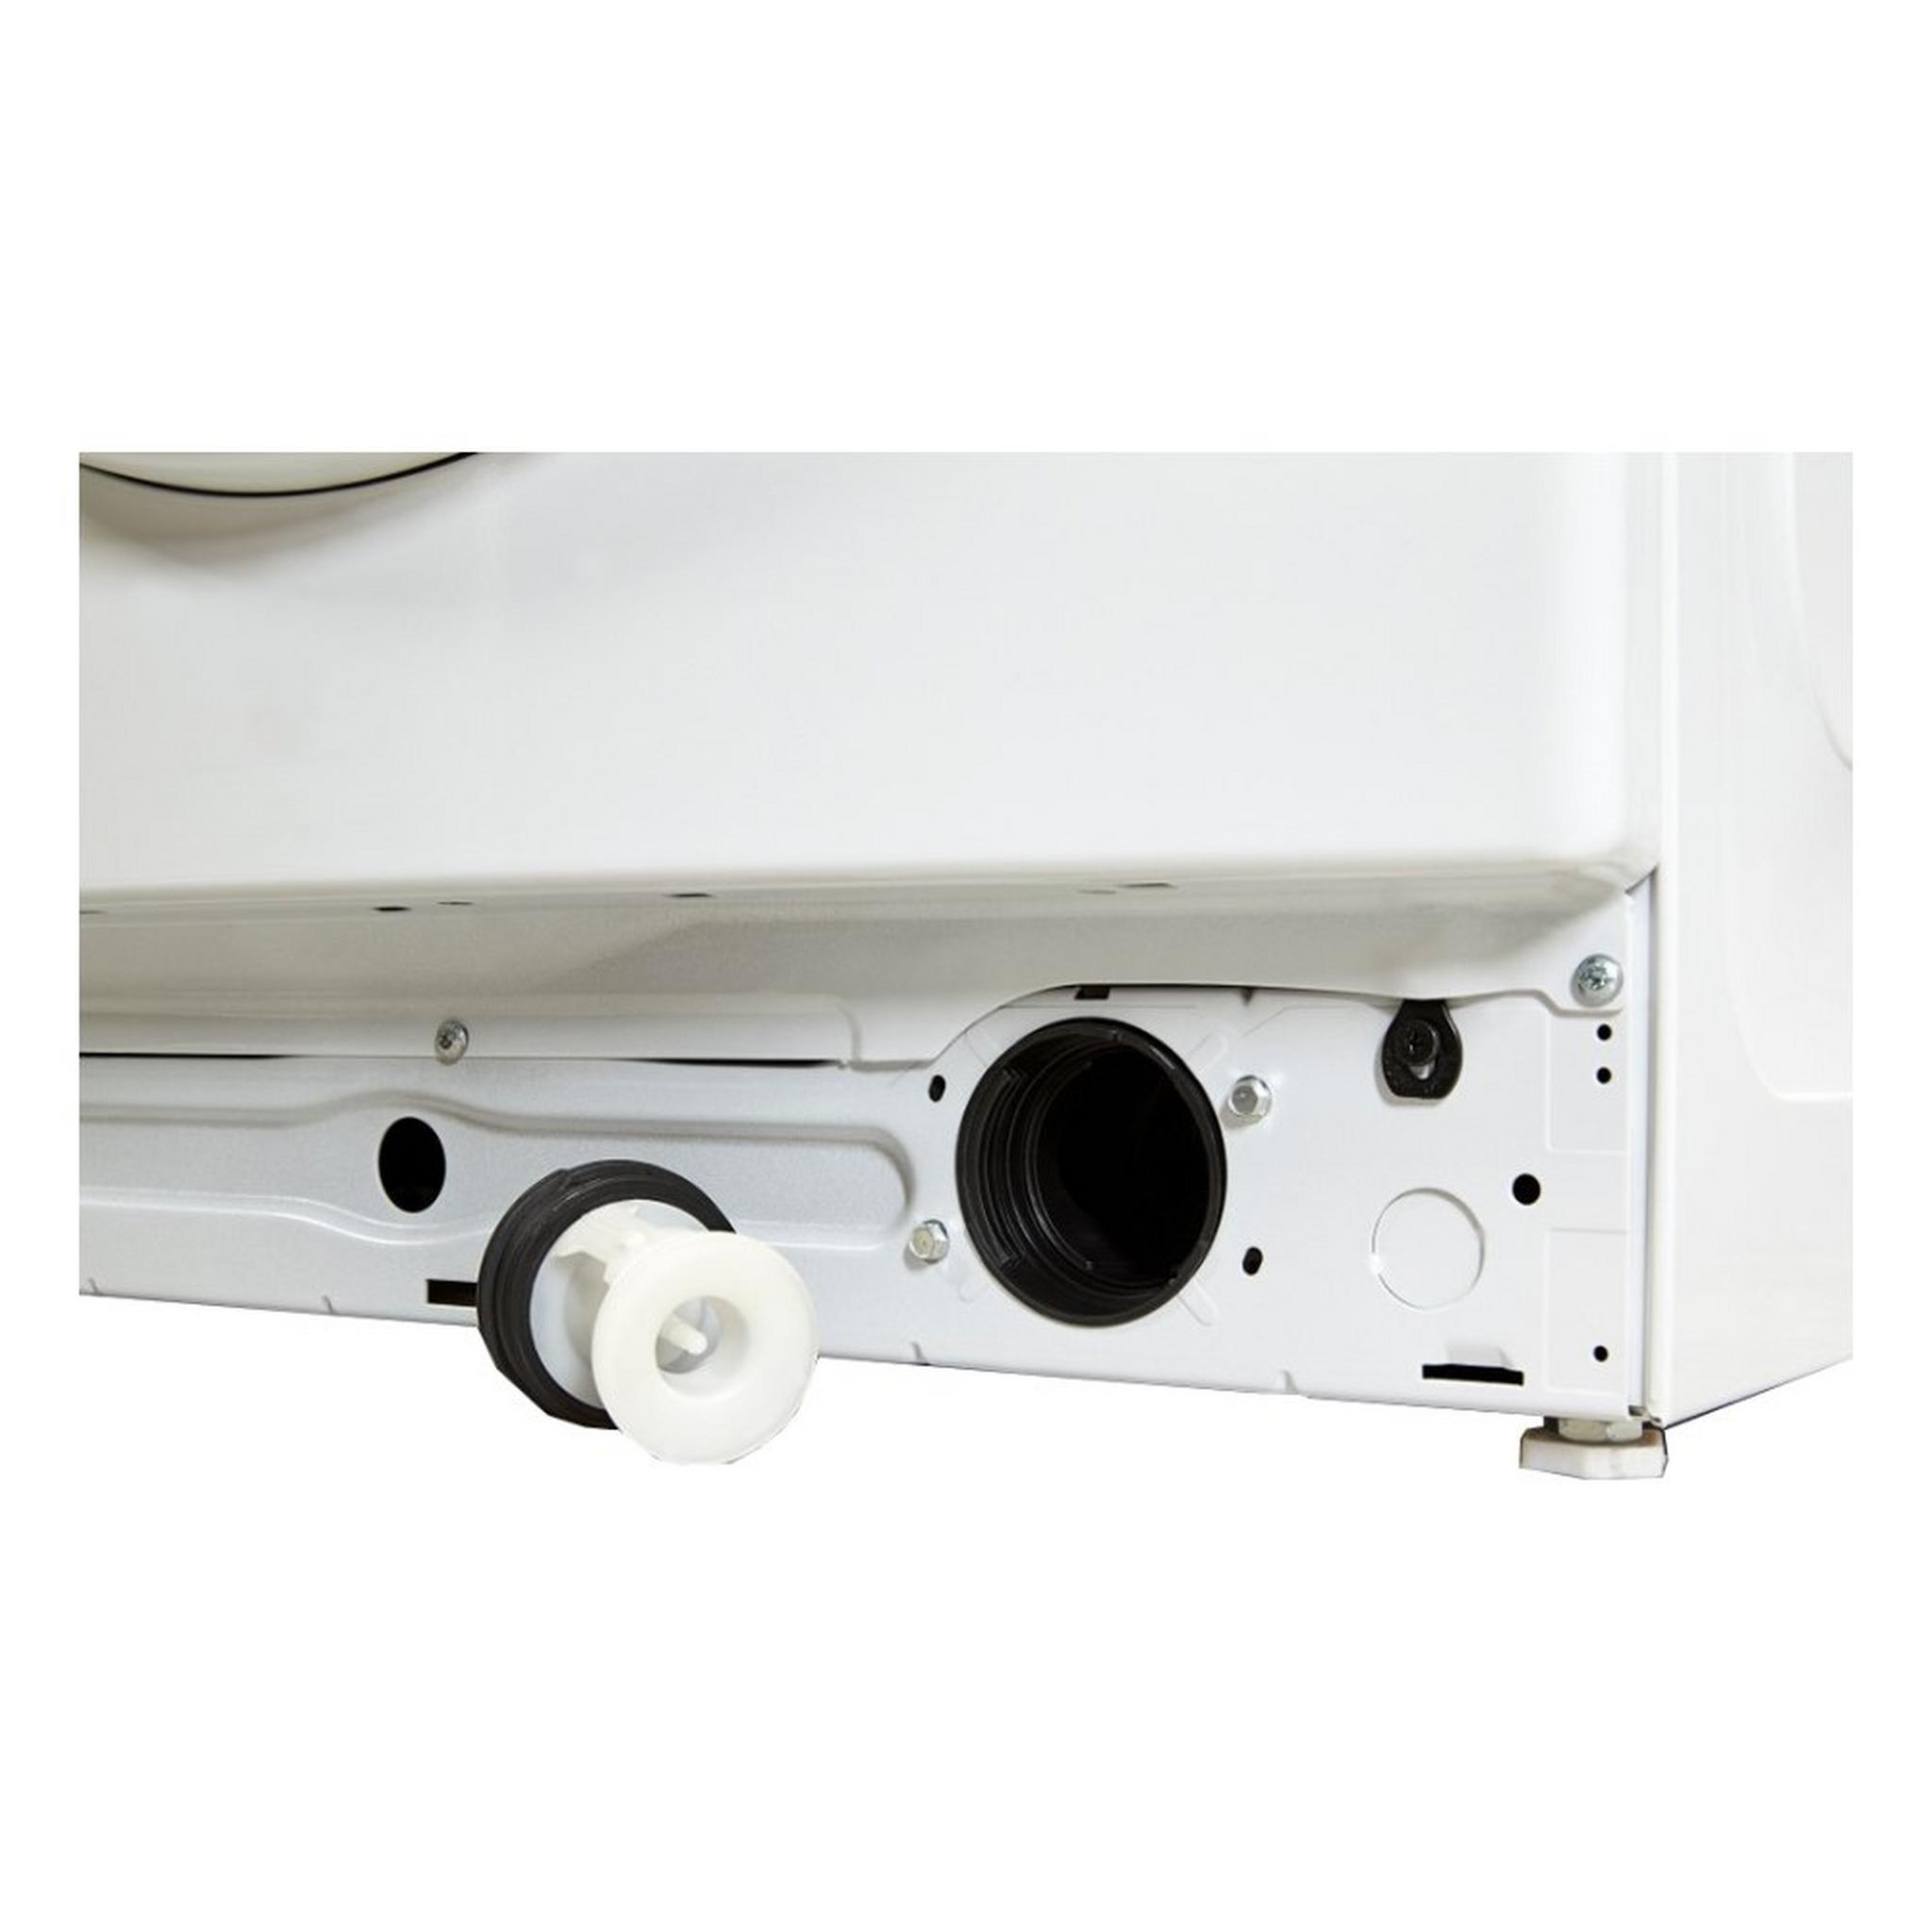 Whirlpool 8KG Front Load Washing Machine (FSCR80211) – White